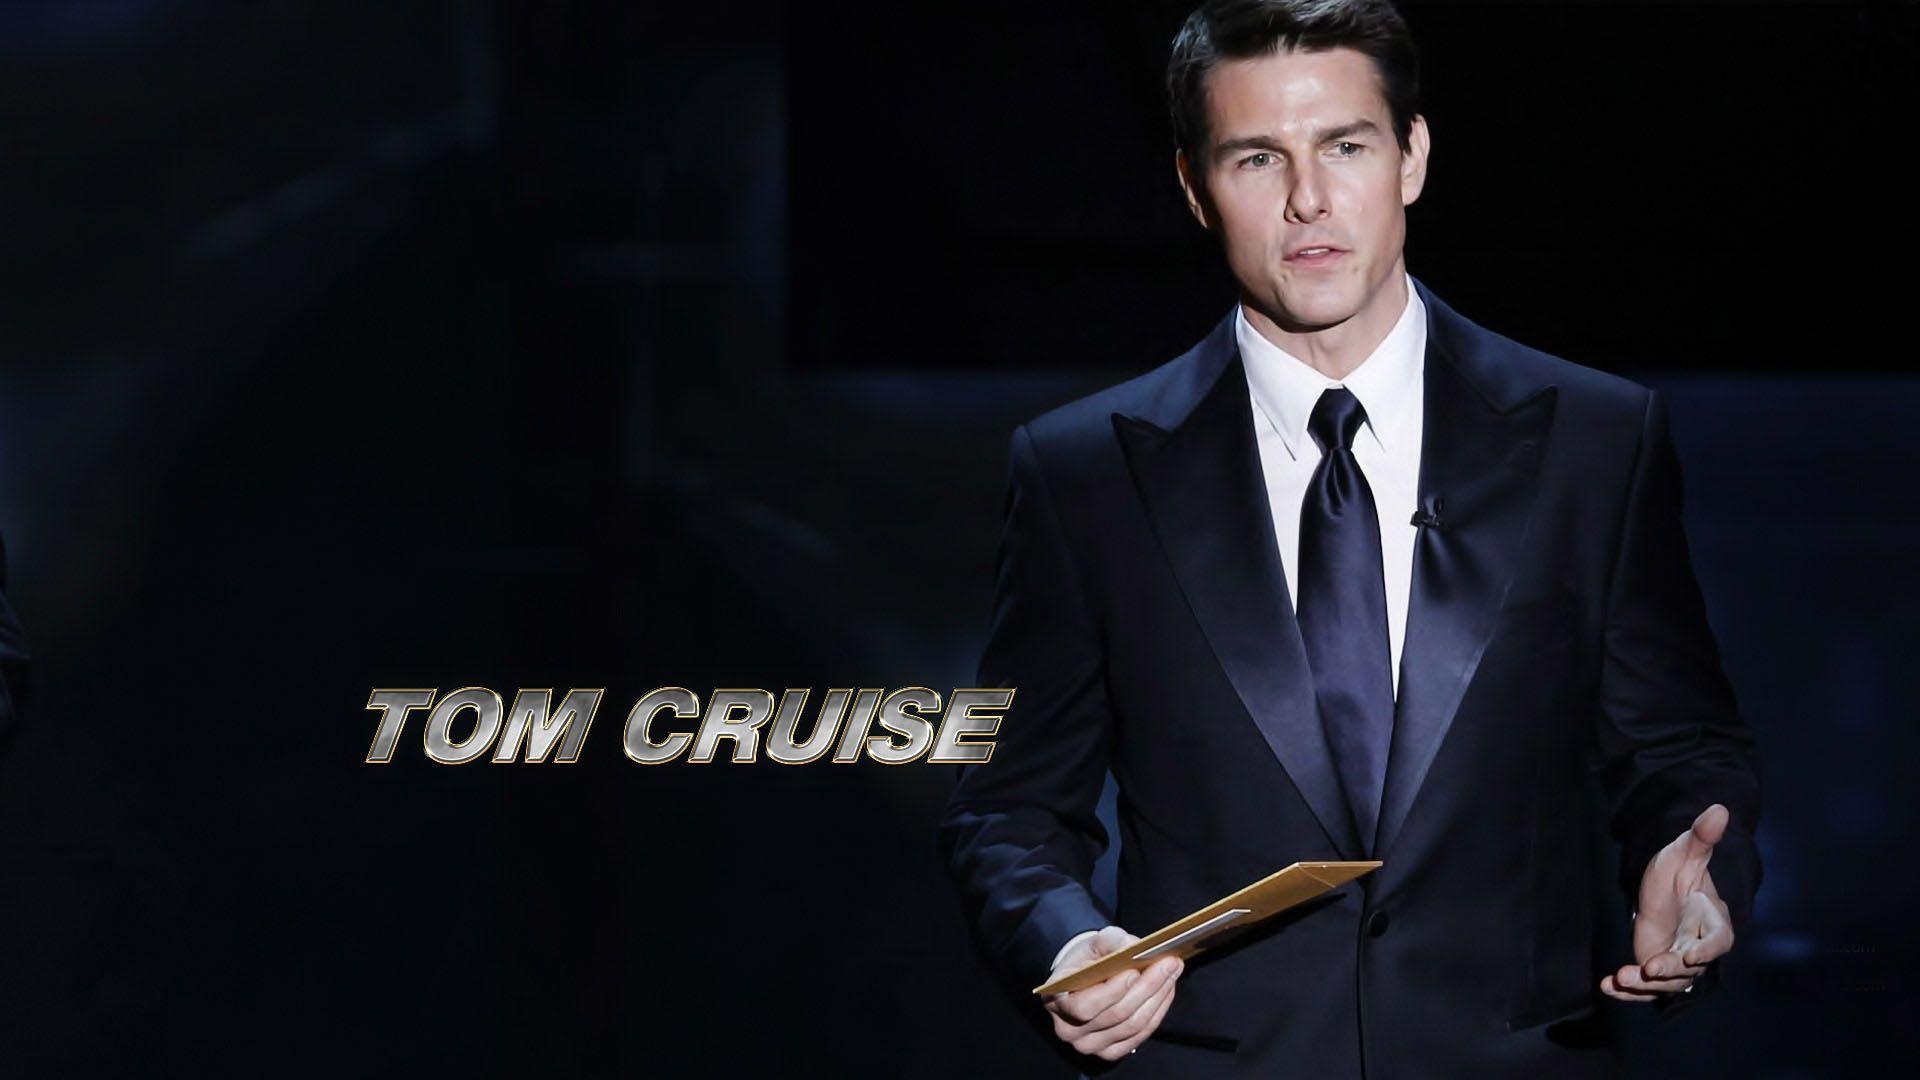 Tom Cruise Wallpaper Desktop HD Image New 1280×800 Tom Cruise